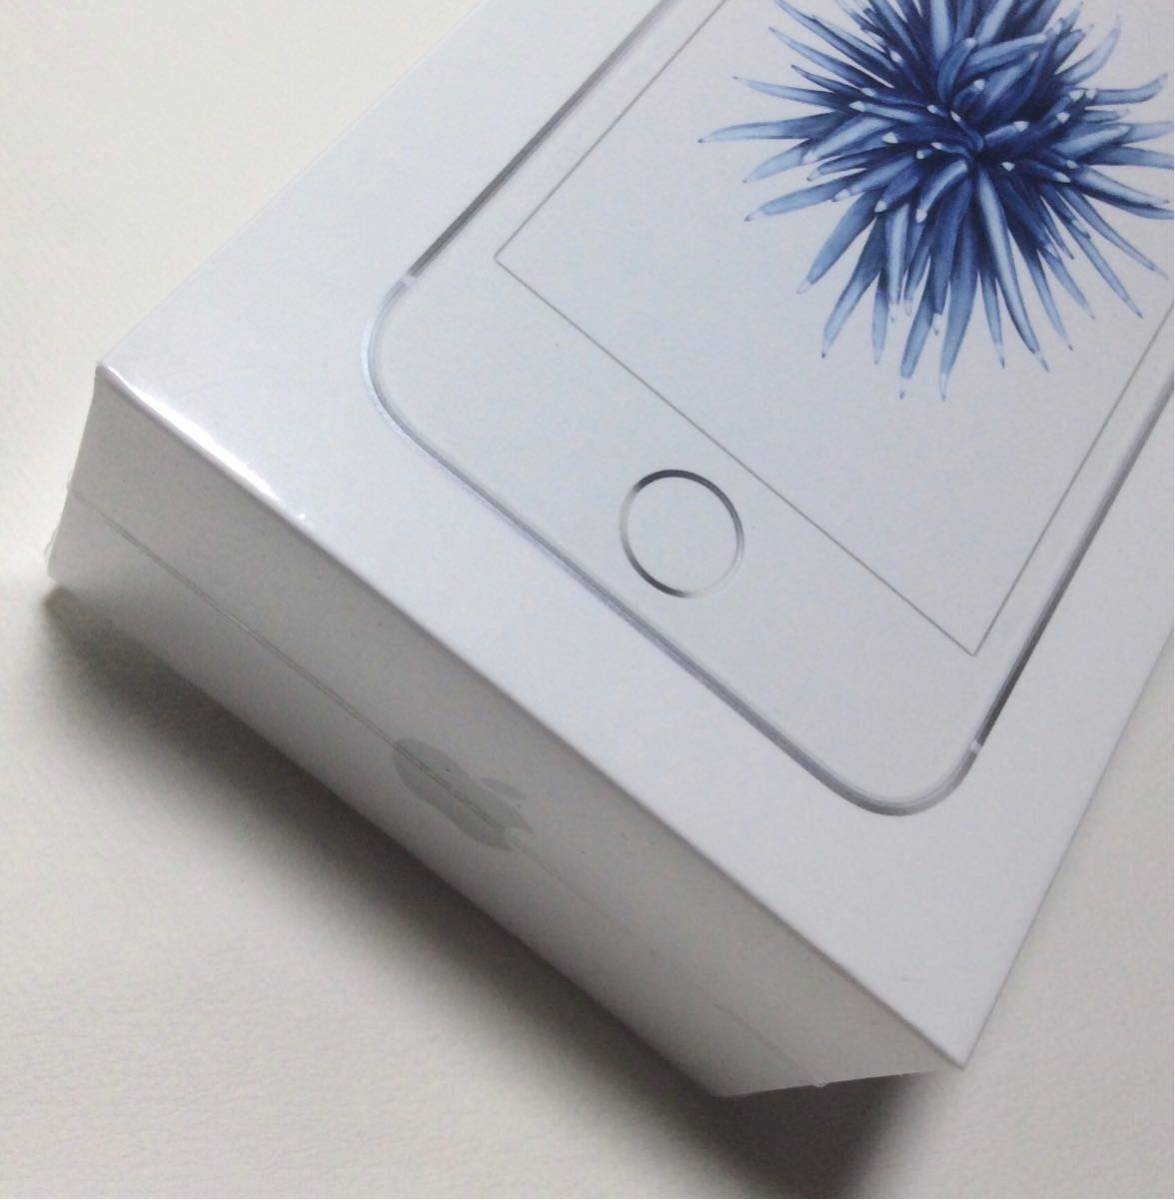 【新品未開封】apple iPhoneSE 128gb Silver MP872J/A【SIMフリー】